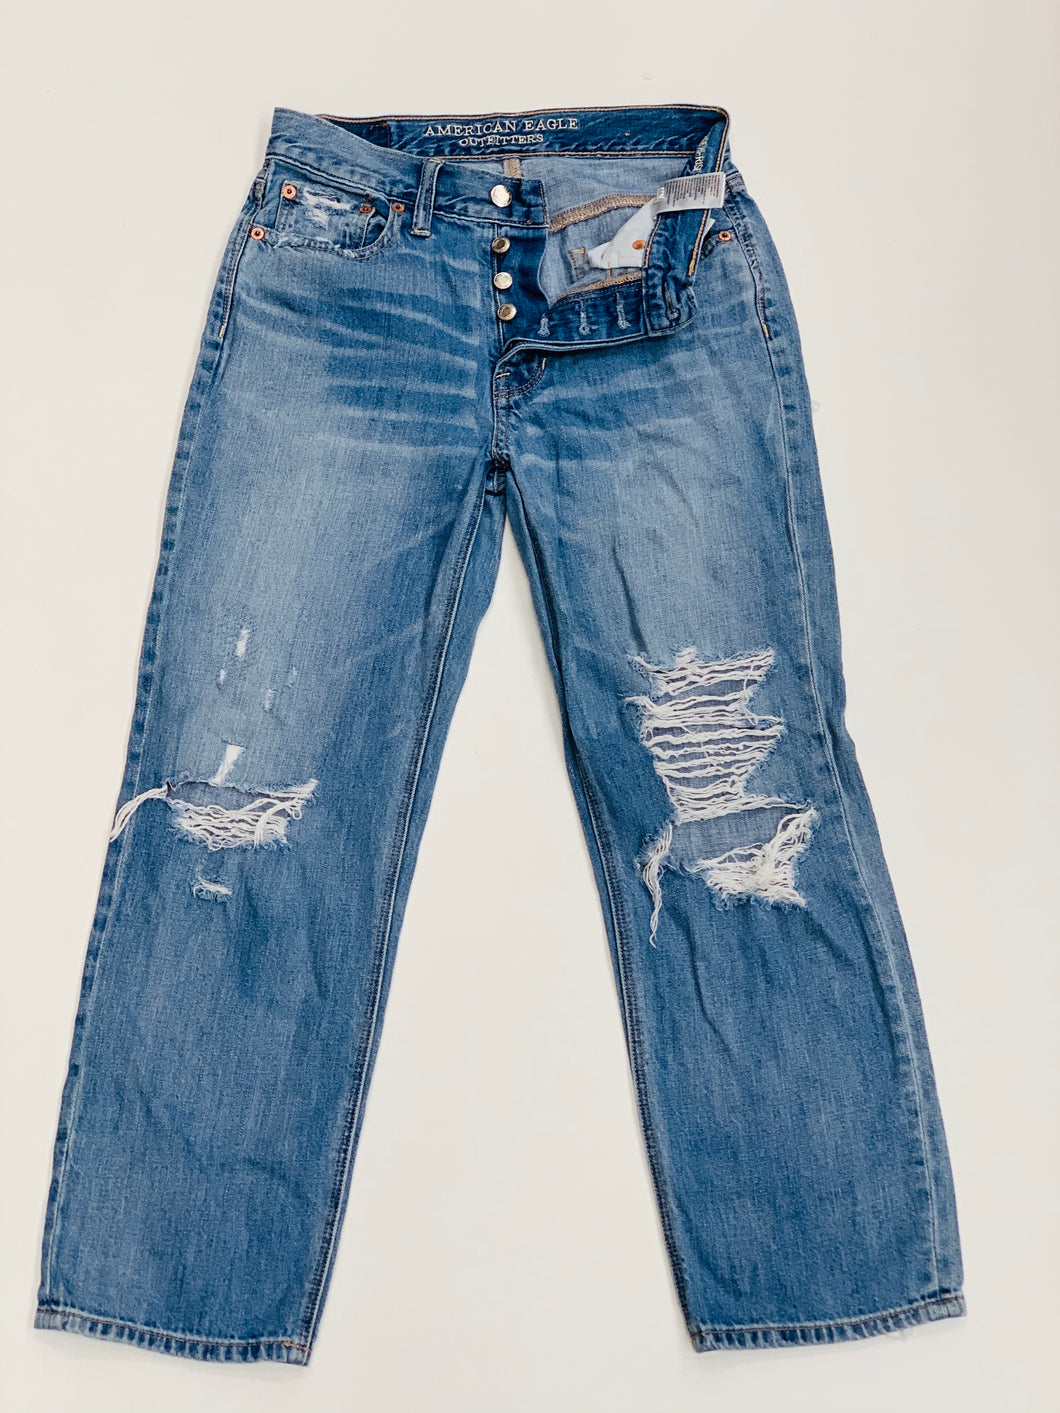 American Eagle Distressed Mom Jeans Size 2 (26)-183A15D0-A5BE-42E9-B217-079C2FB23CC1.jpeg